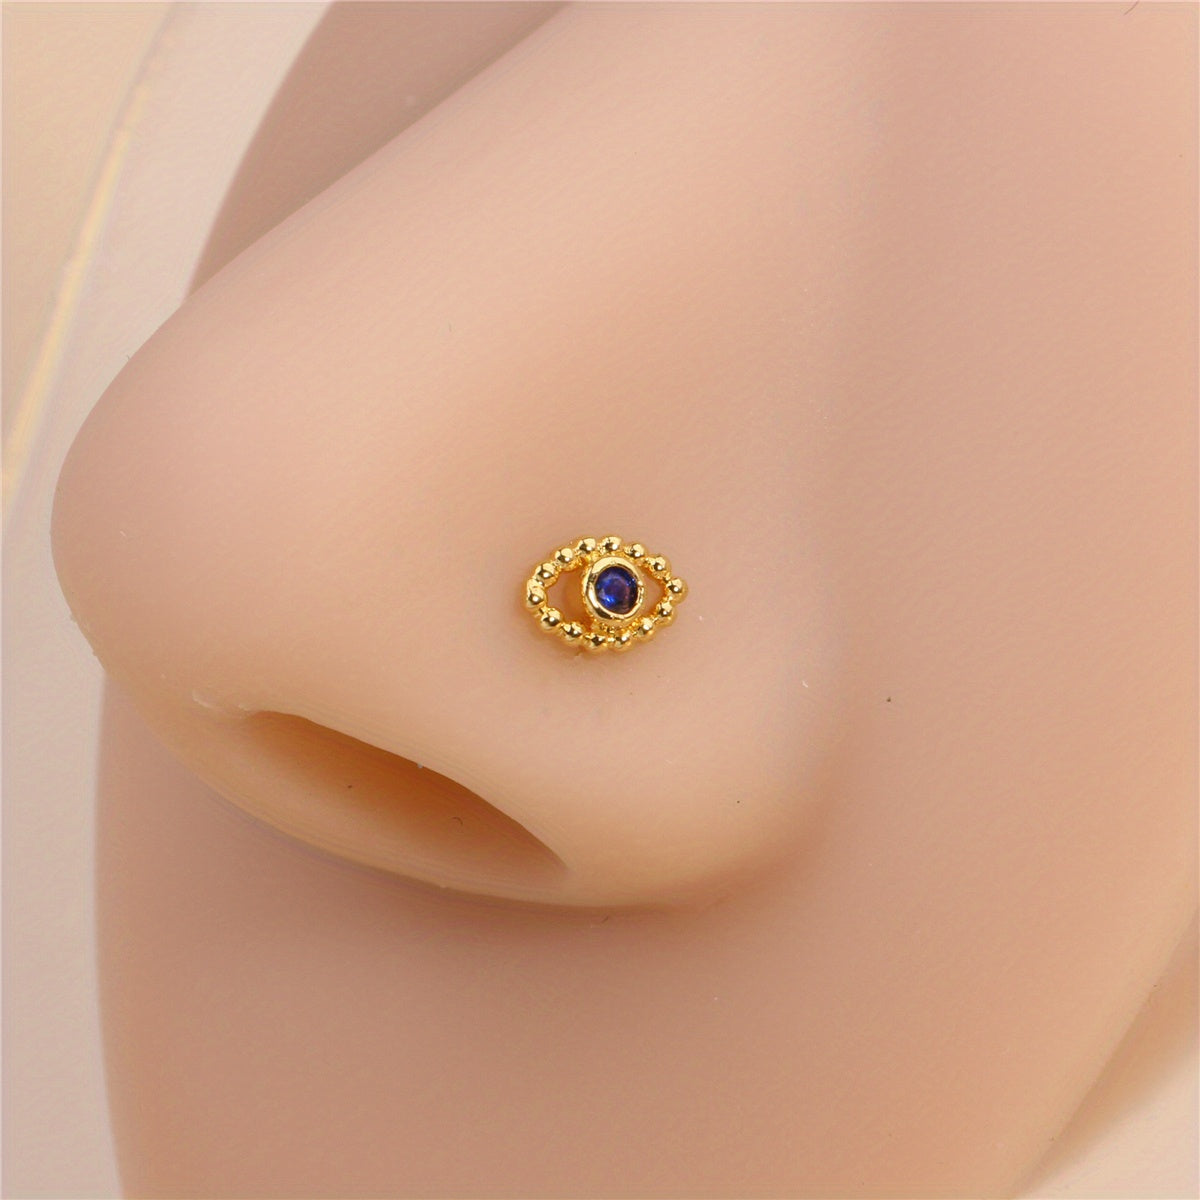 1PCS Devil Eye L Shaped Nose Ring Studs For Women Men Body Piercing Jewelry